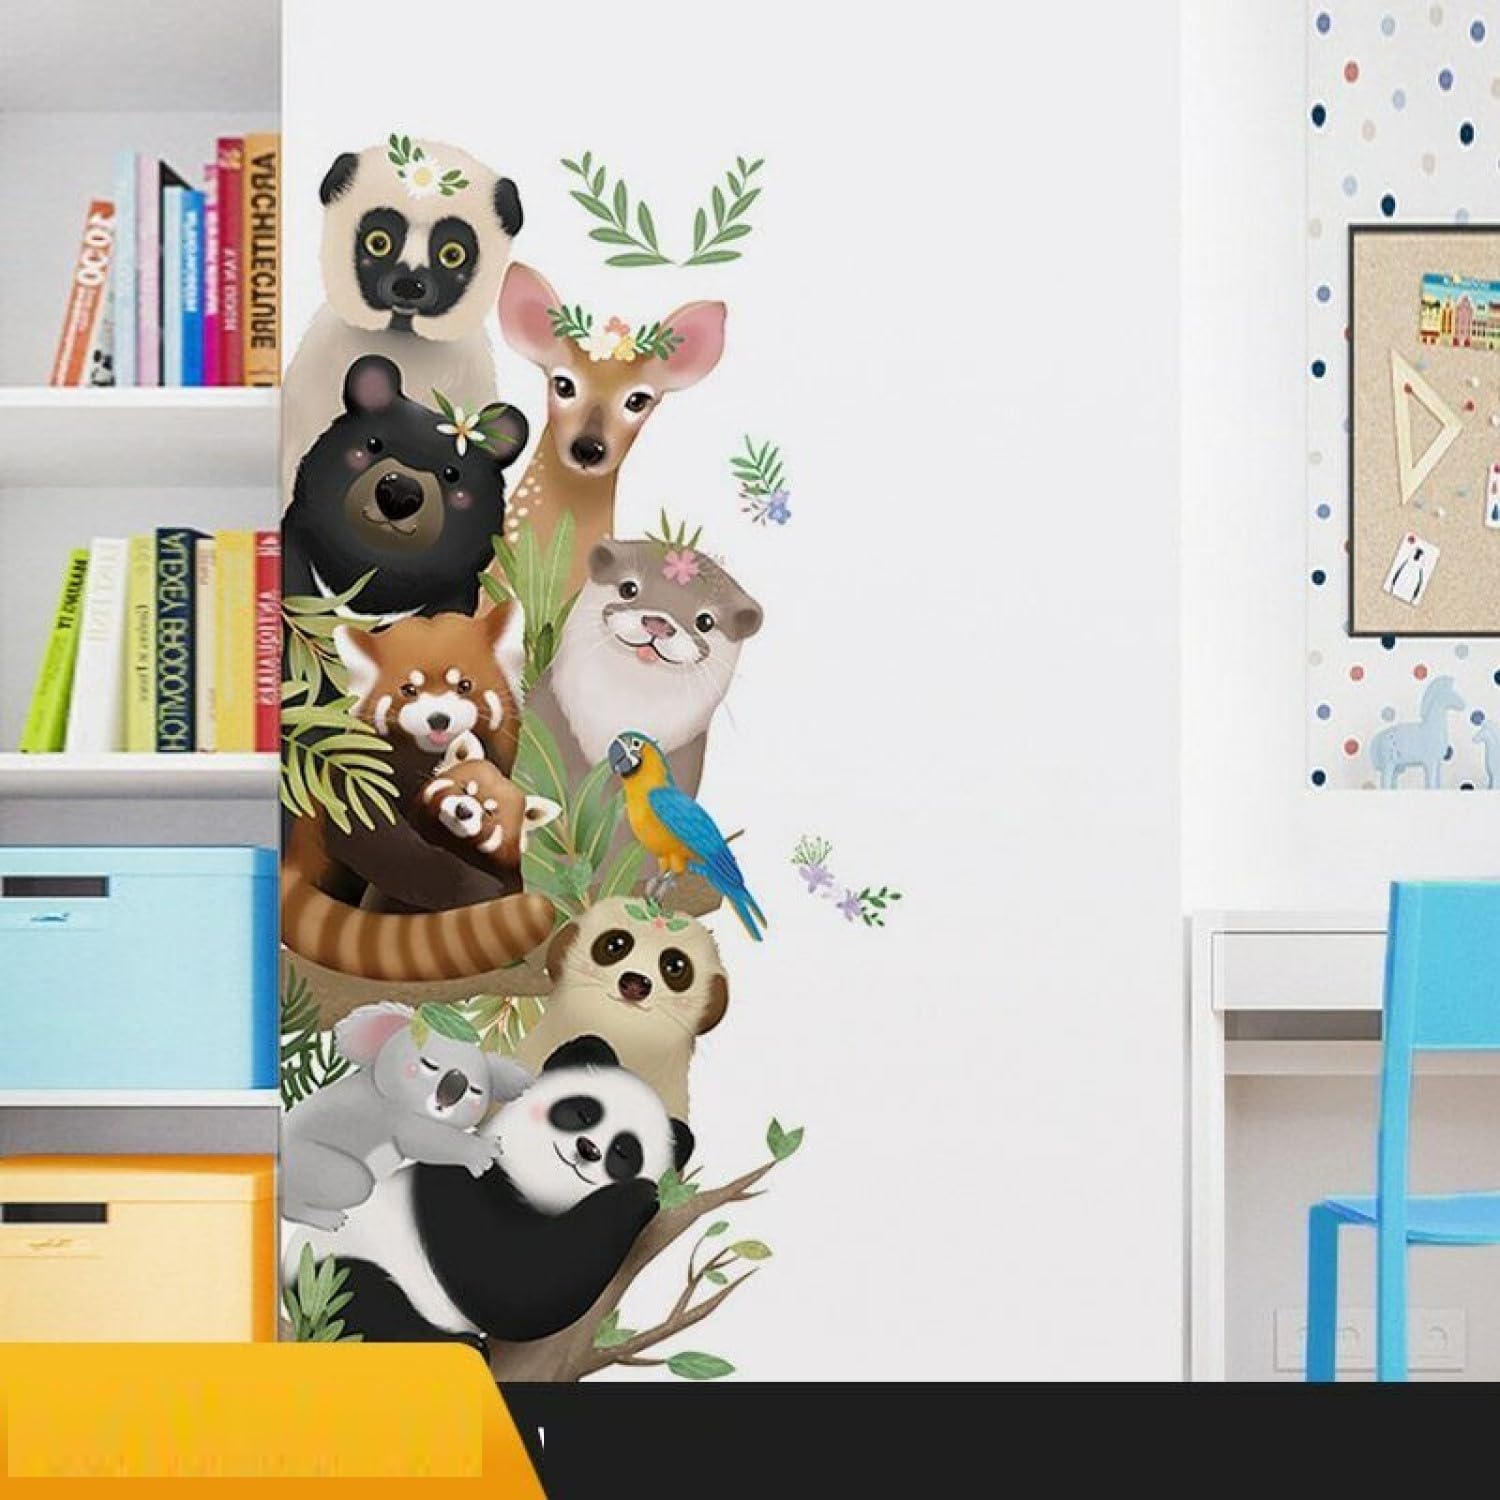 JAAMSO ROYALS-Super Cute Animals Decorative Self Adhesive PVC Vinyl Kids Room Wall Sticker-Hall-Bed Room-Living Room-Decor Wall Sticker-Stumbit Kids